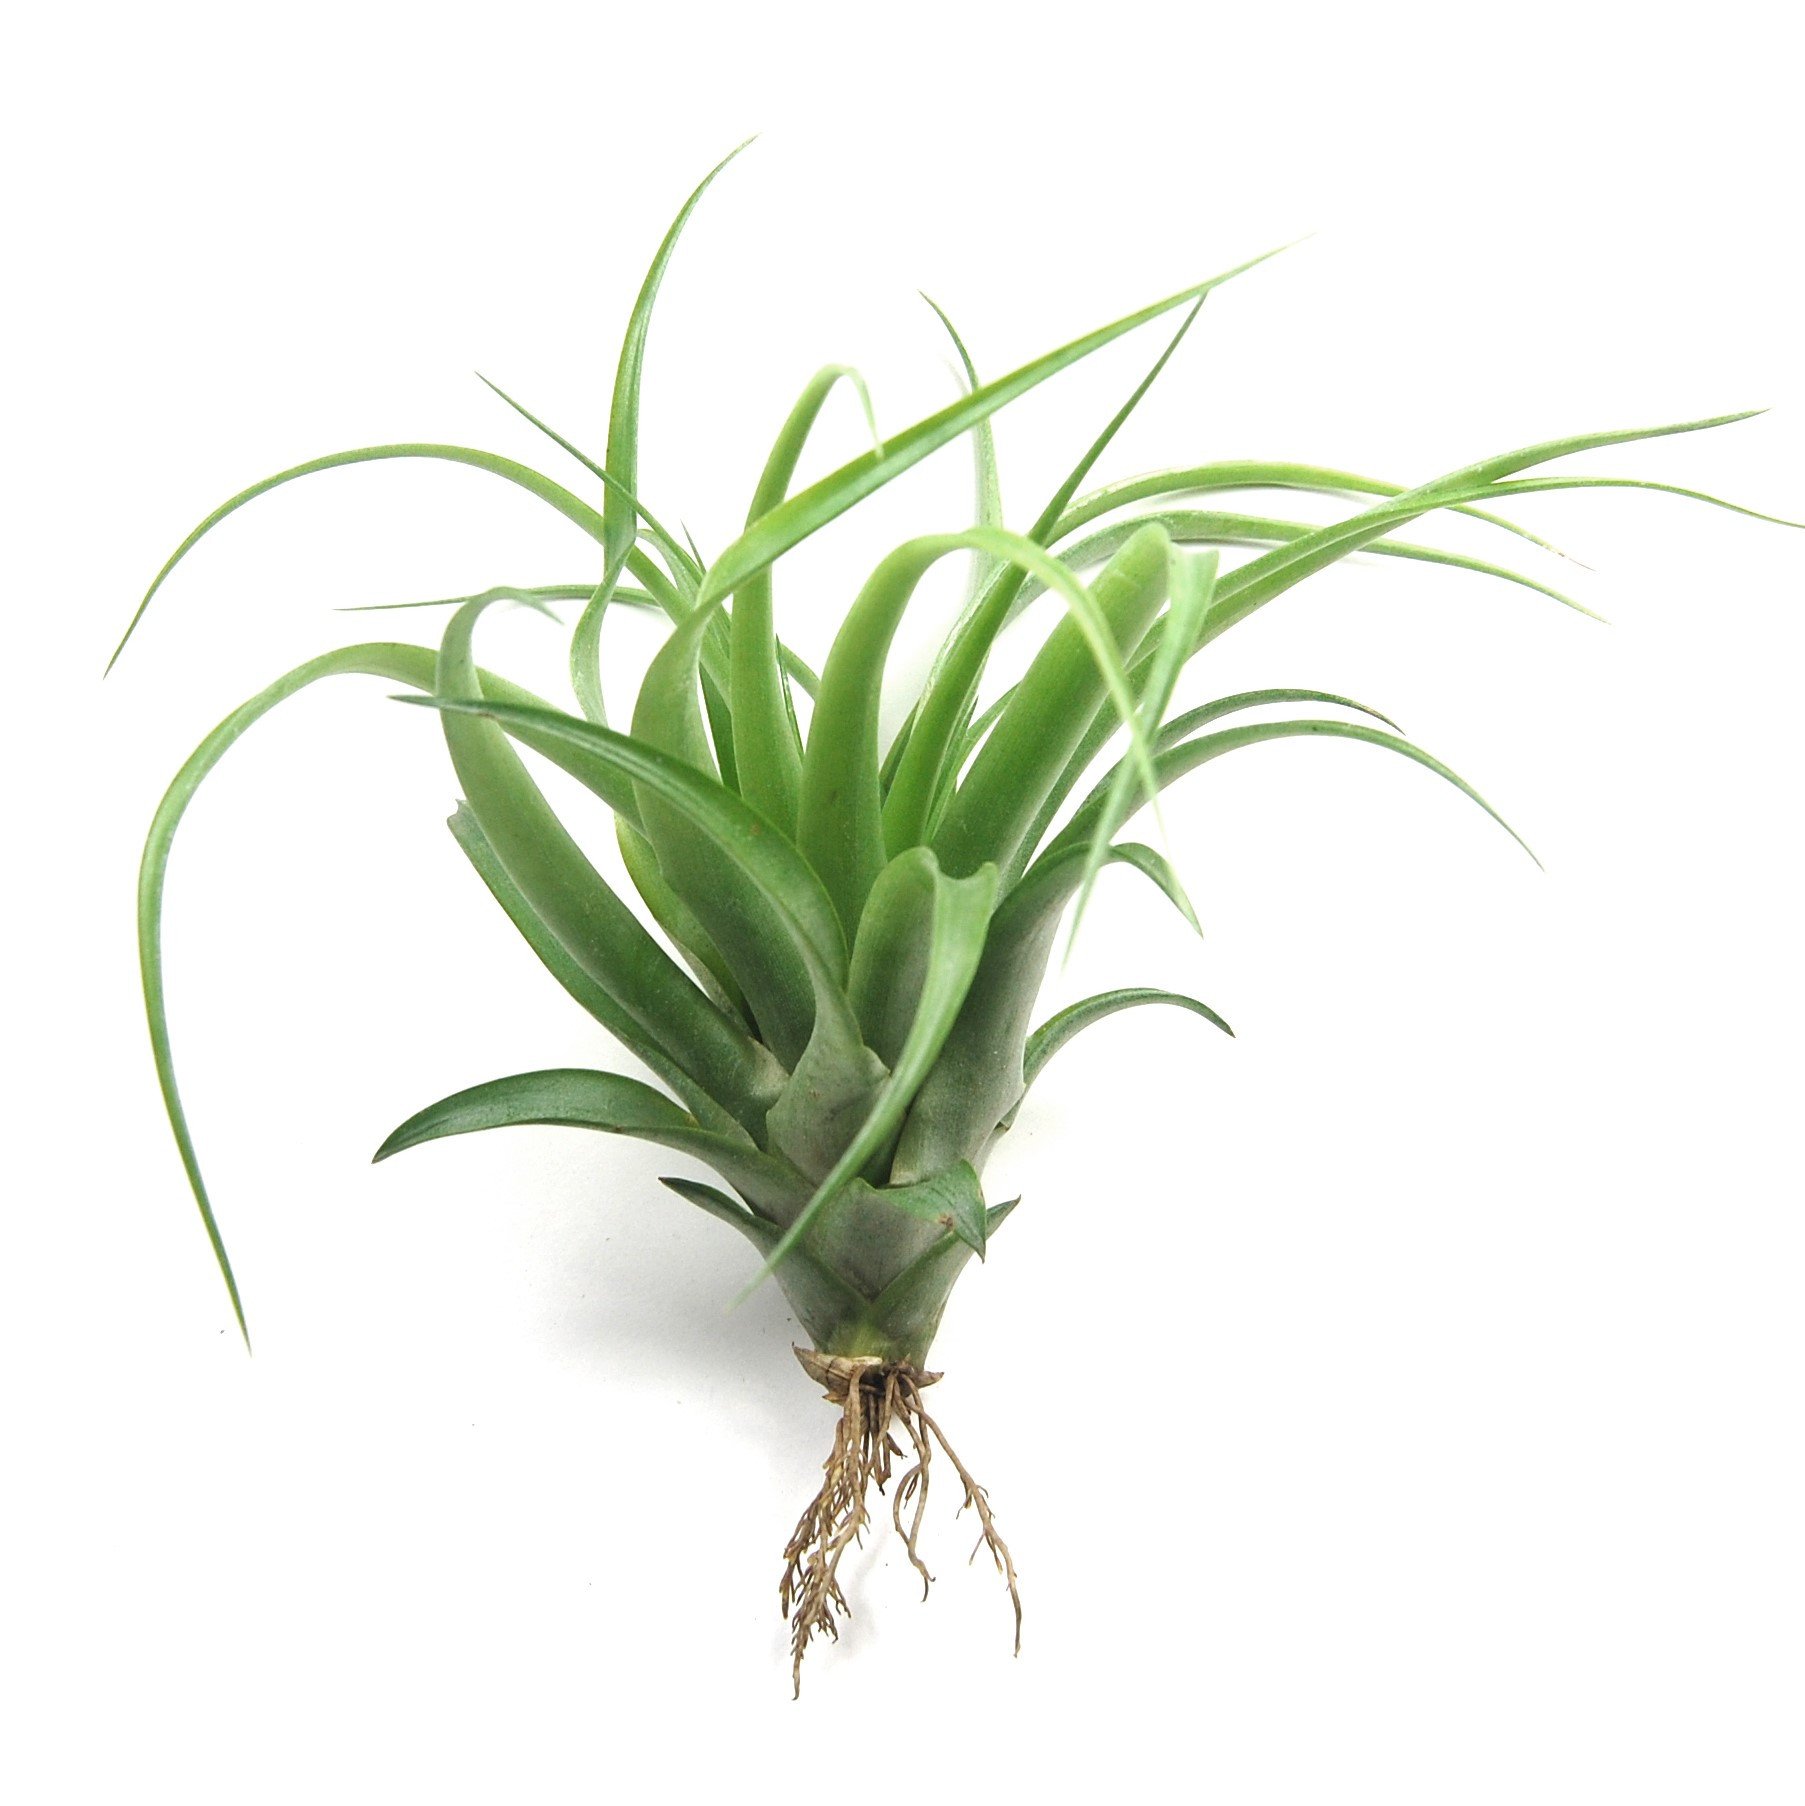 Large Abdita Brachycaulos Air Plants / 5-8 Inch Plants